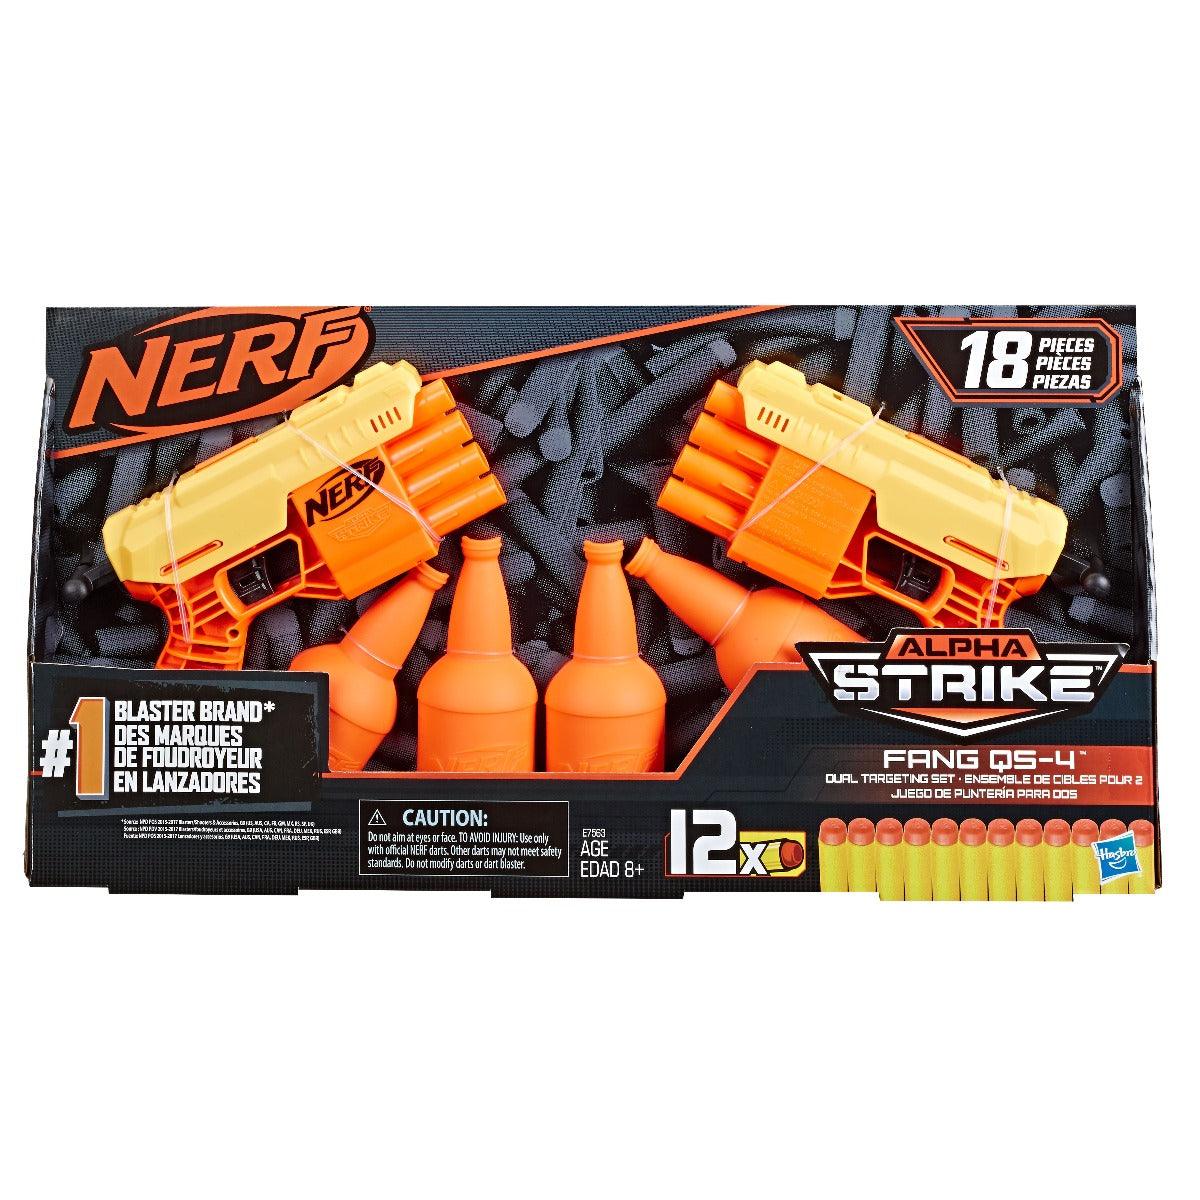 Nerf Fang QS-4 Dual Targeting Set, 2 Toy Blasters, 4 Half-Targets, 12 Darts